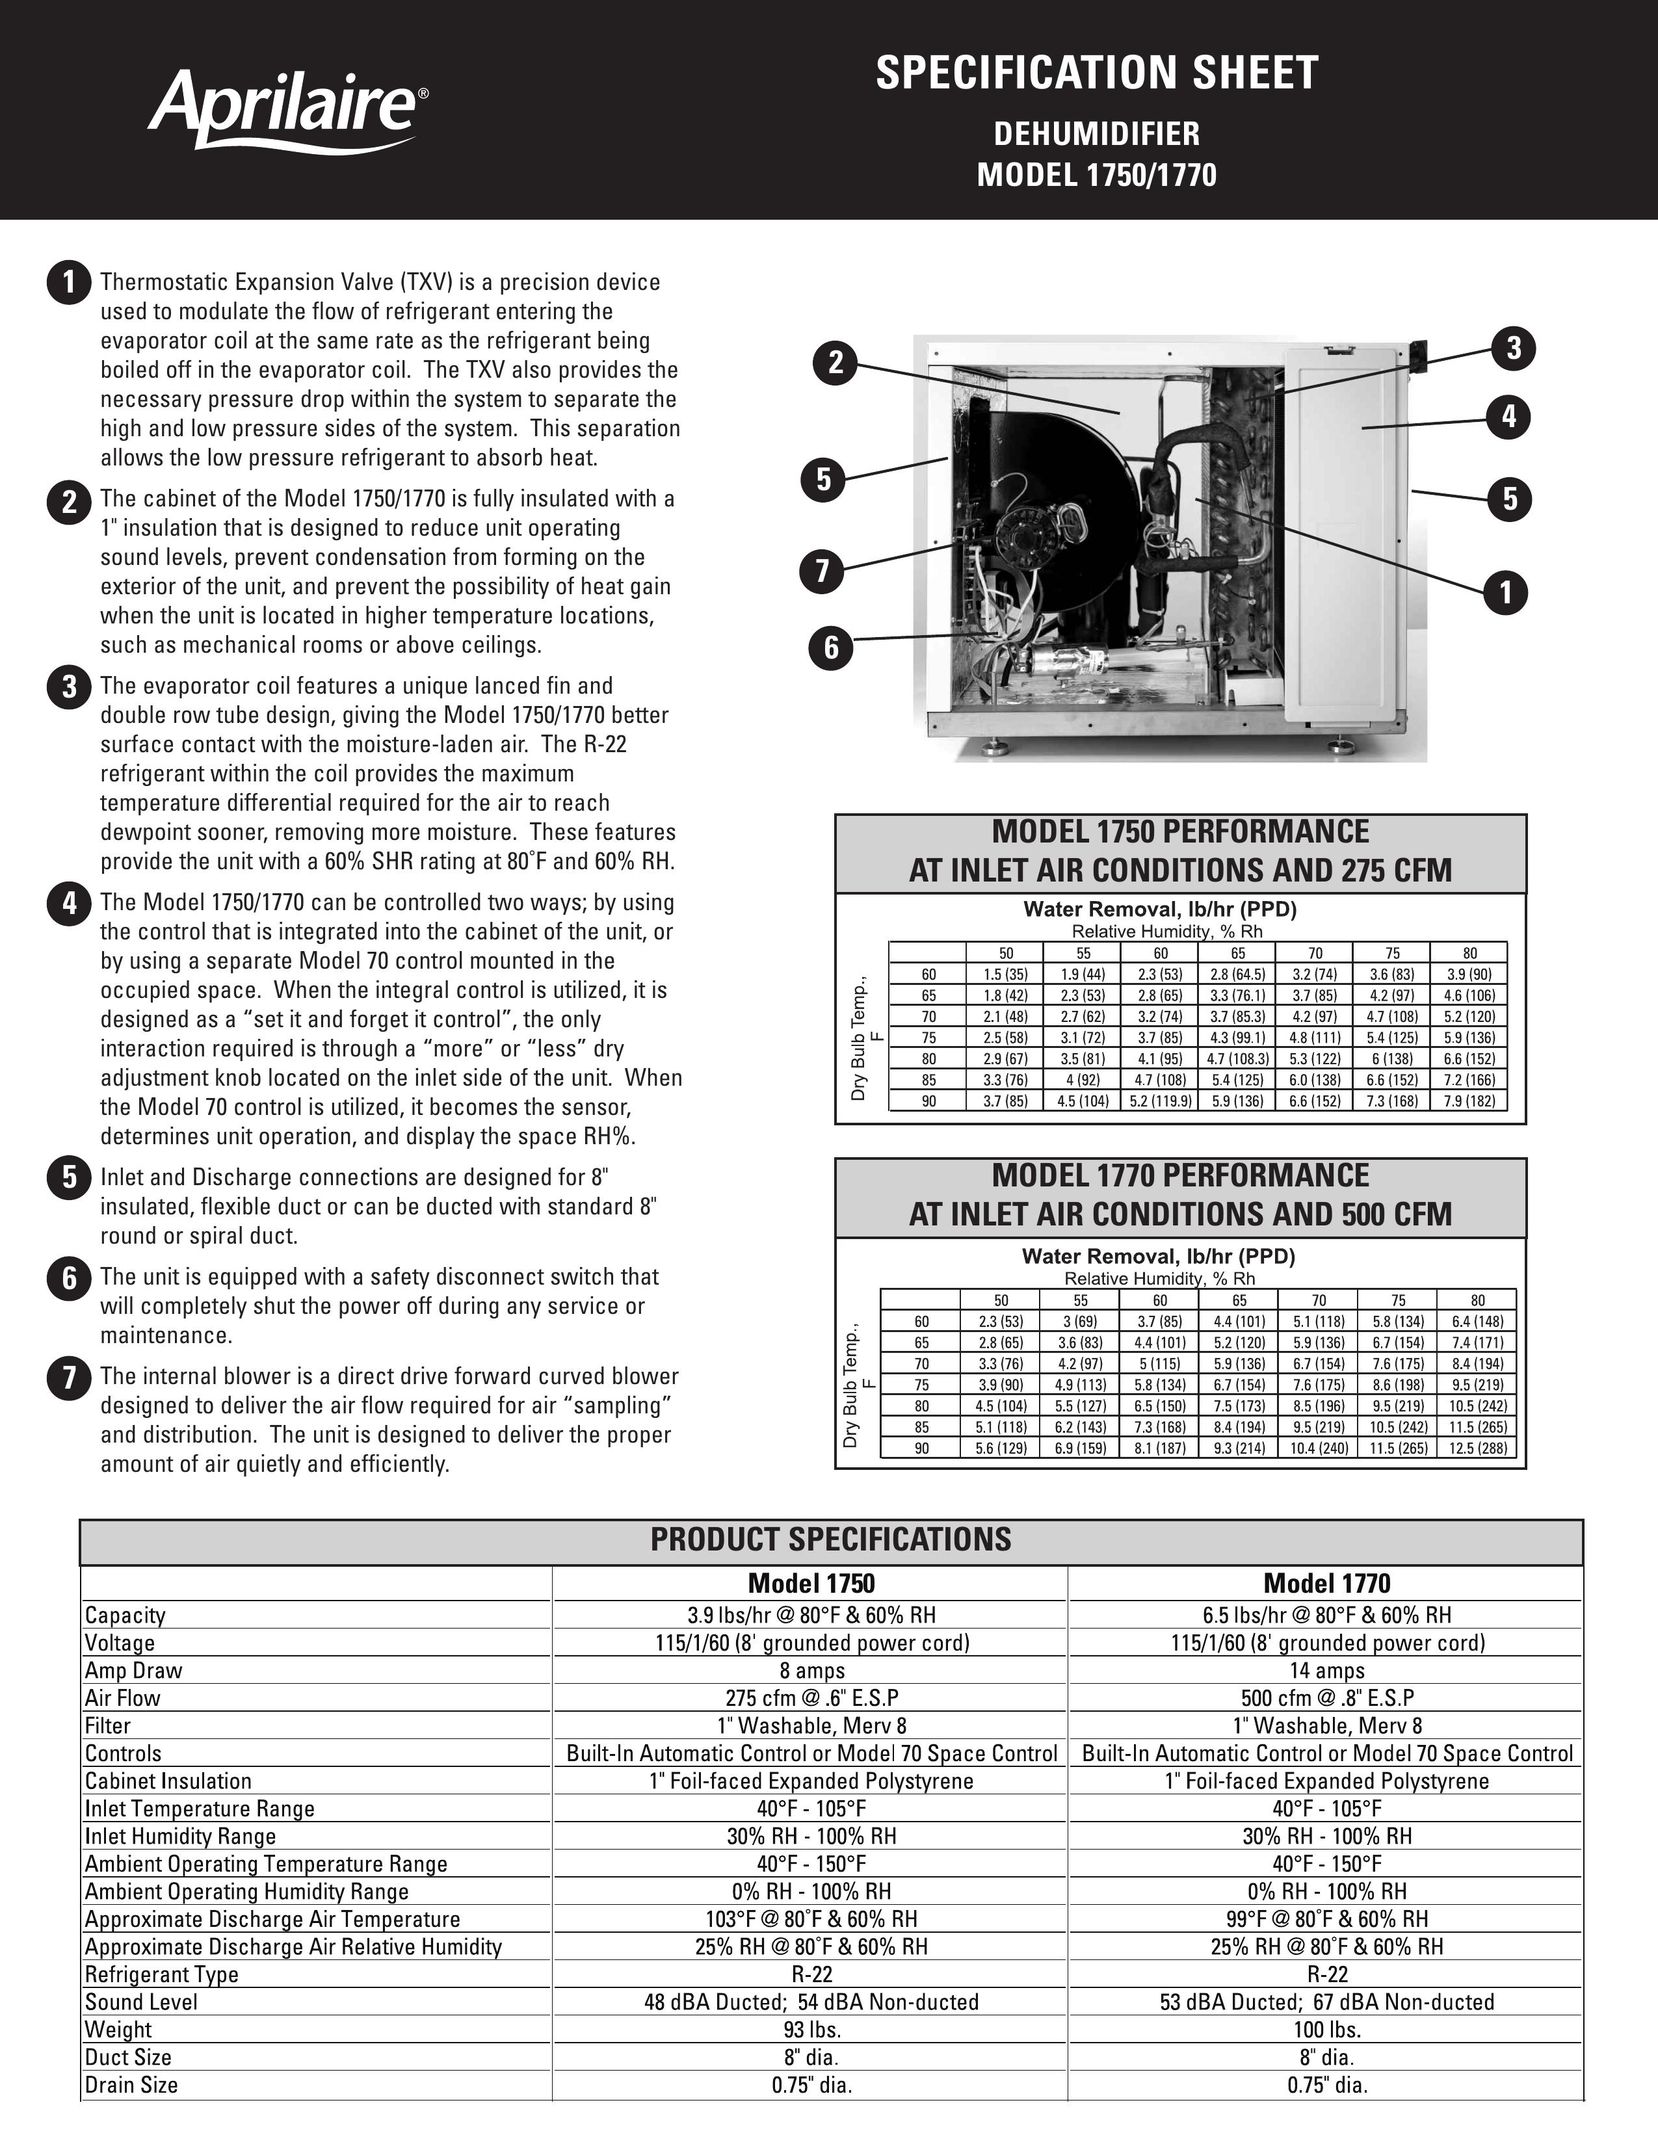 Aprilaire 1750 Air Conditioner User Manual